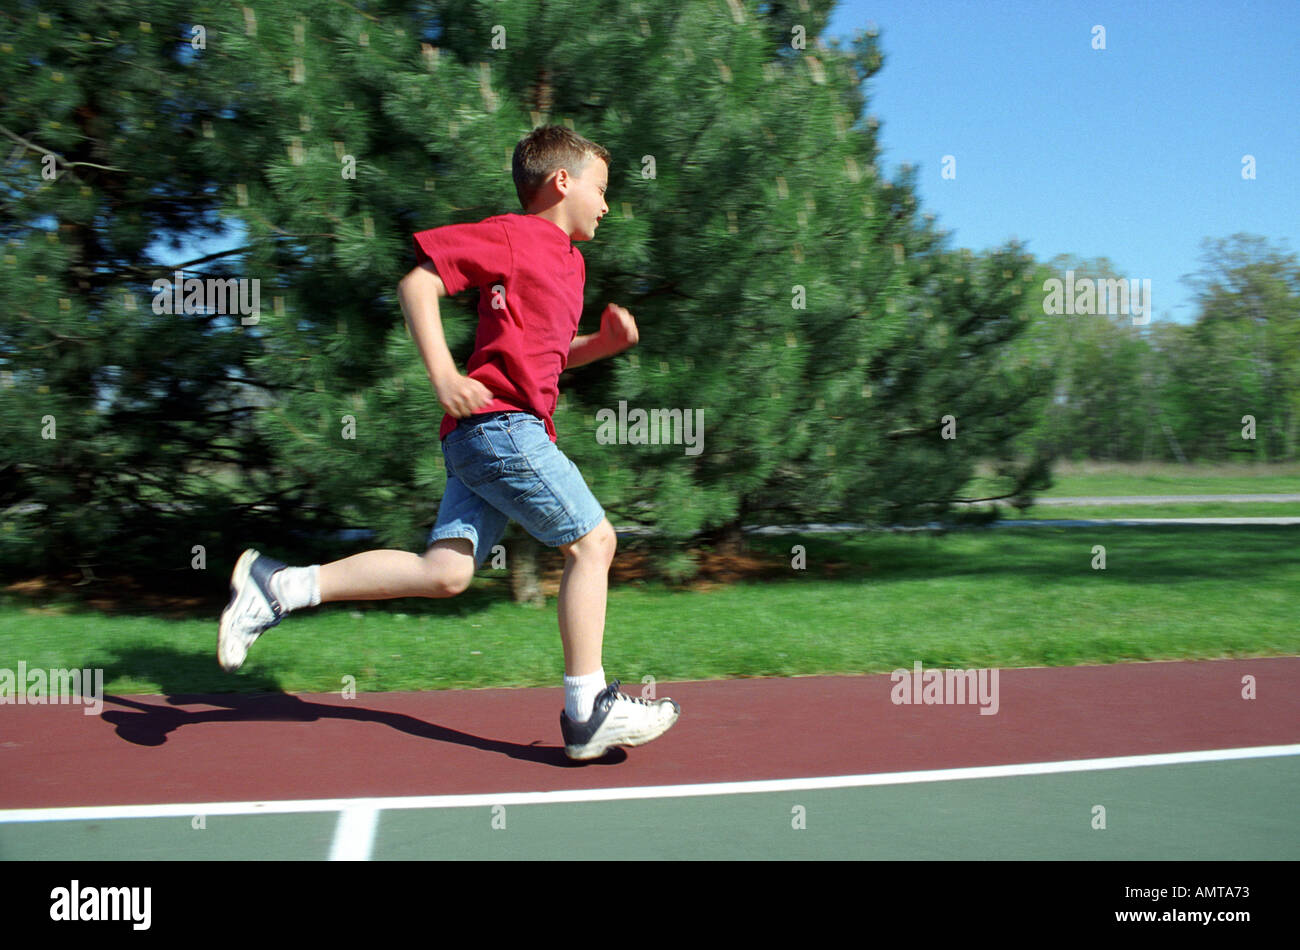 DM 8 ans boy running chaussures de tennis vieux port Banque D'Images